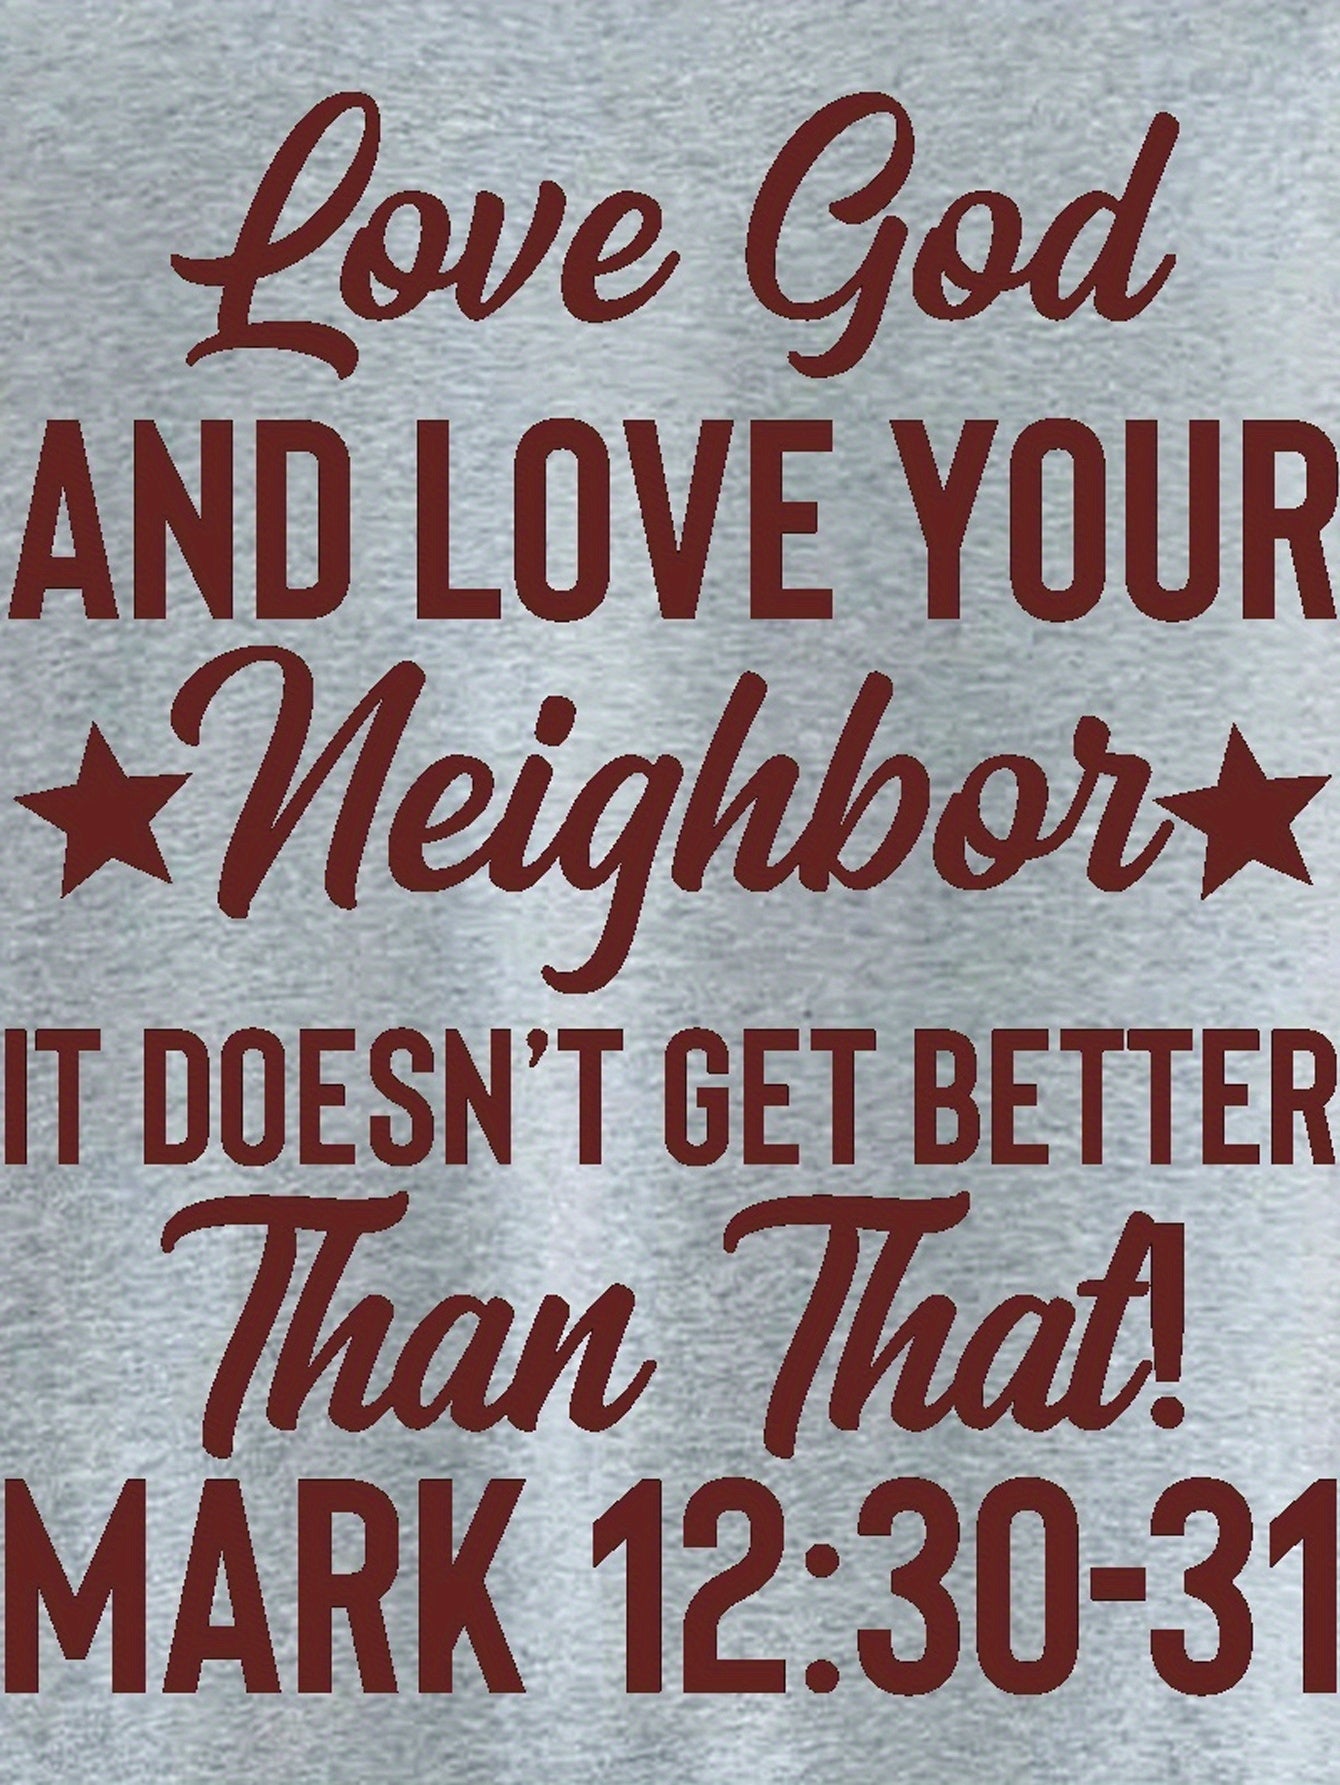 Mark 12:30-31 LOVE GOD AND LOVE YOUR NEIGHBOR Youth Christian Pullover Sweatshirt claimedbygoddesigns